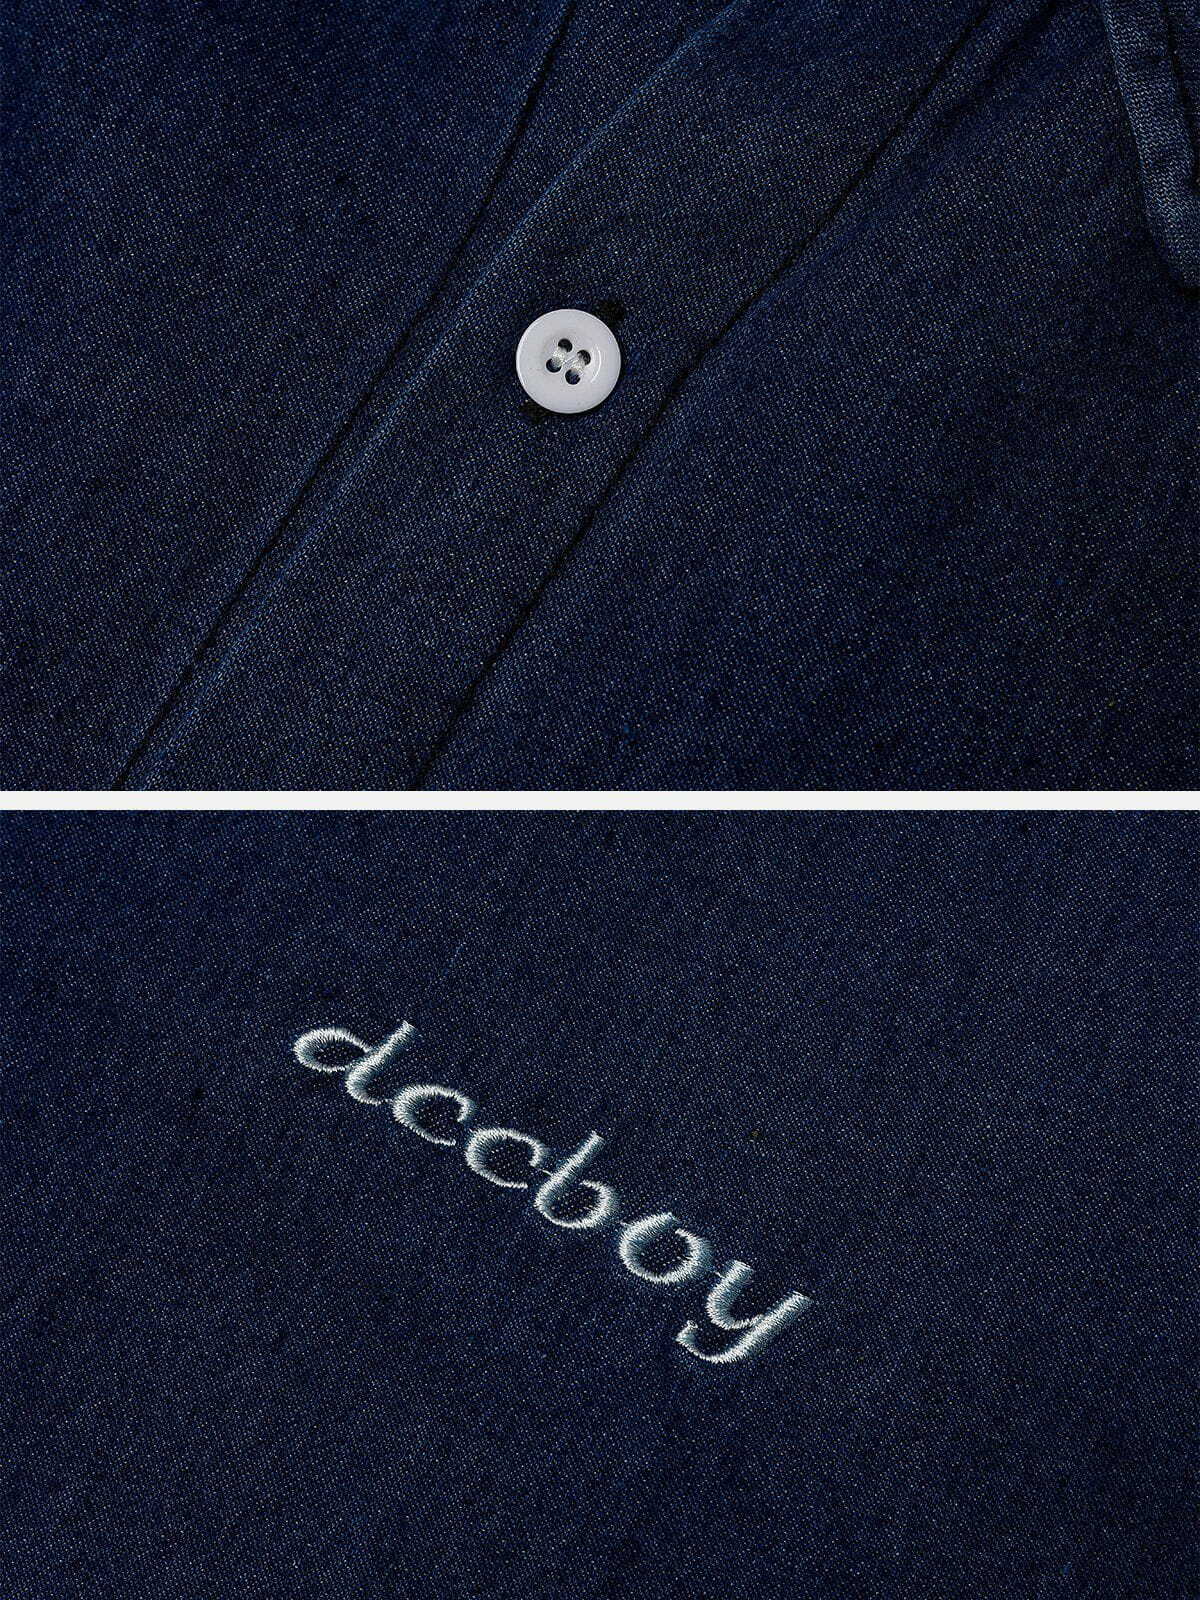 denim short sleeve shirt vintage wash retro streetwear 7674